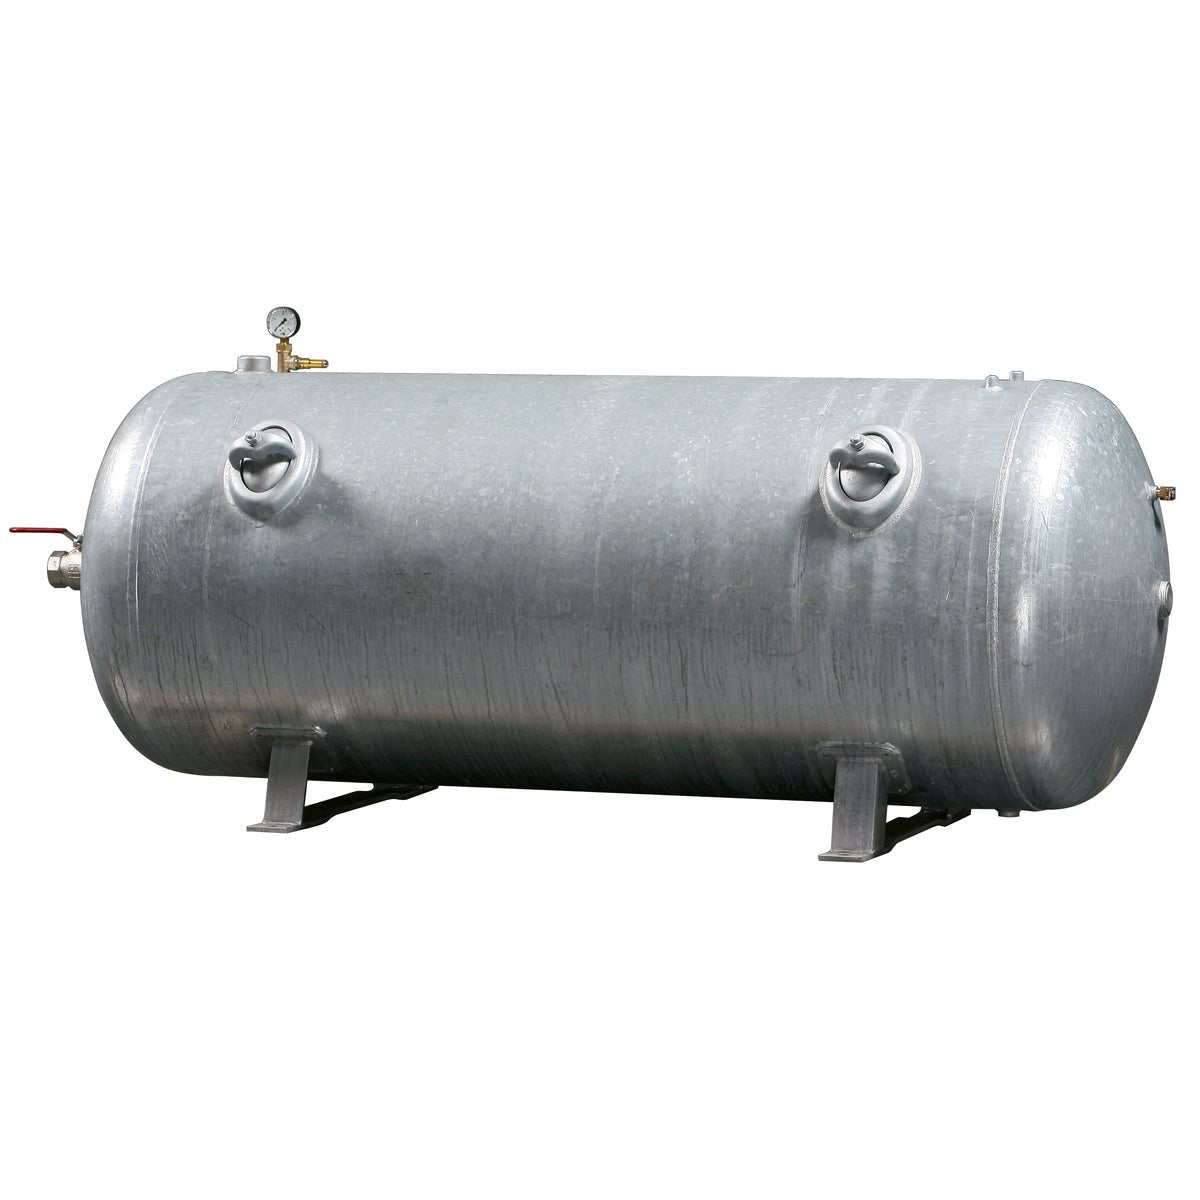 Kaeser compressed air tank 500/11 lg. CE/SPV